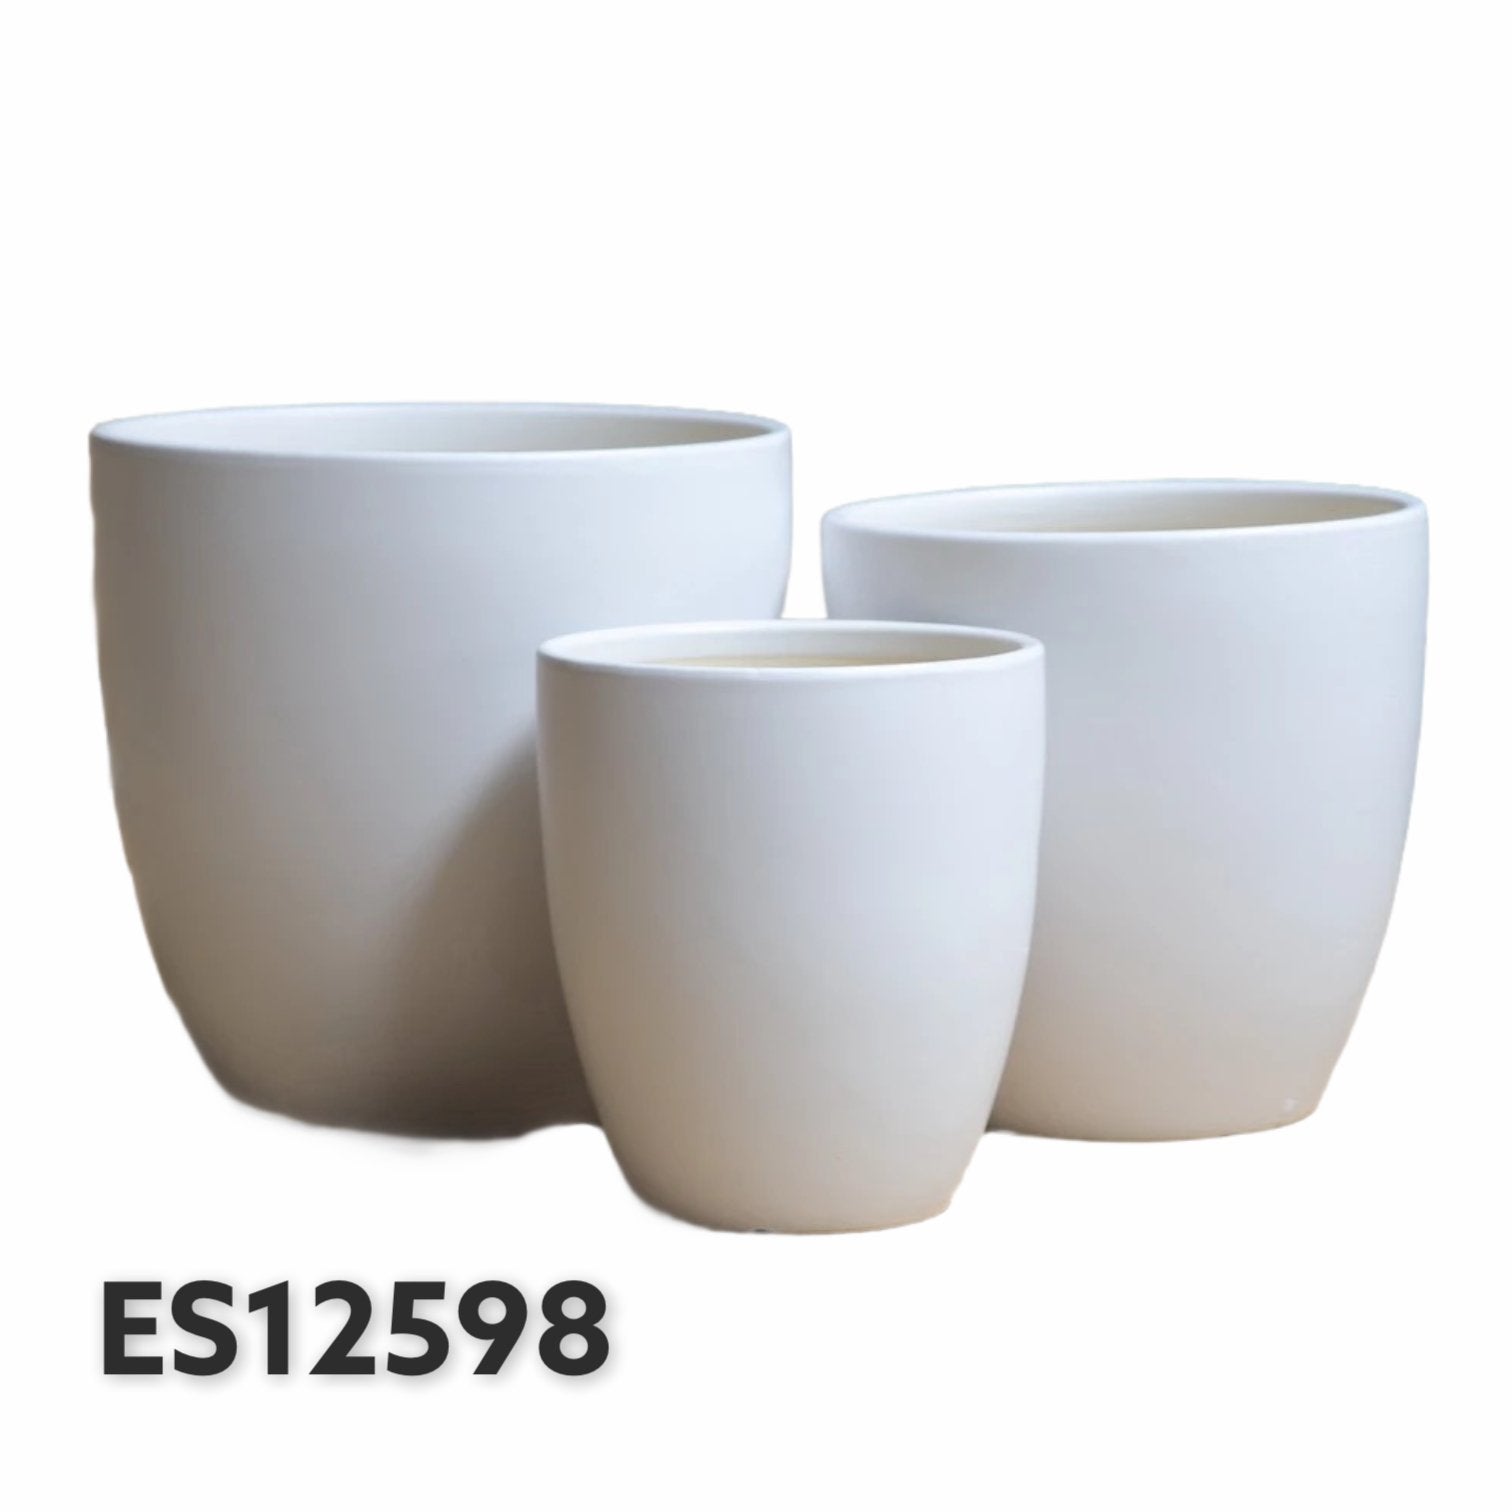 ES1259 Glazed Clay Ceramic Pot - Pots For Plants